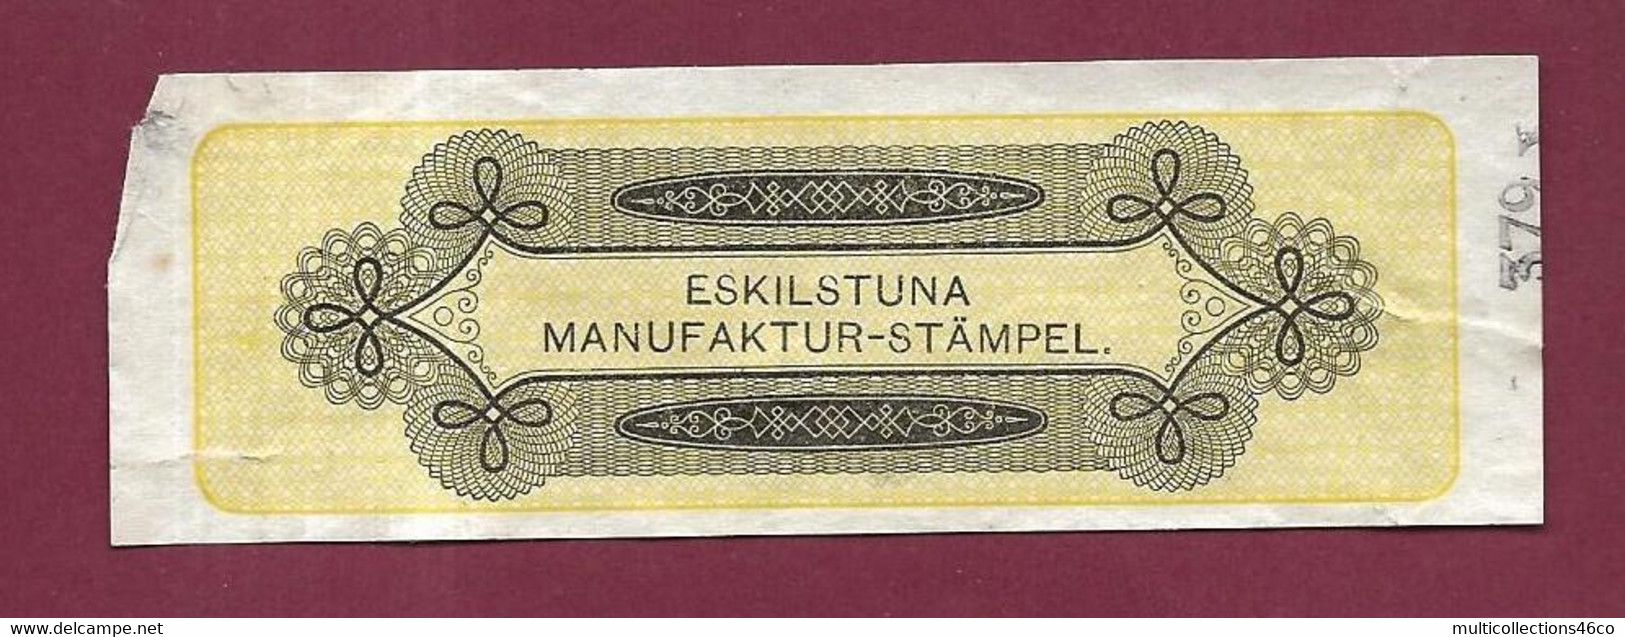 250122 - ETIQUETTE BANDE CIGARETTE Eskilstuna Manufaktur-stämpel 379 - Documents